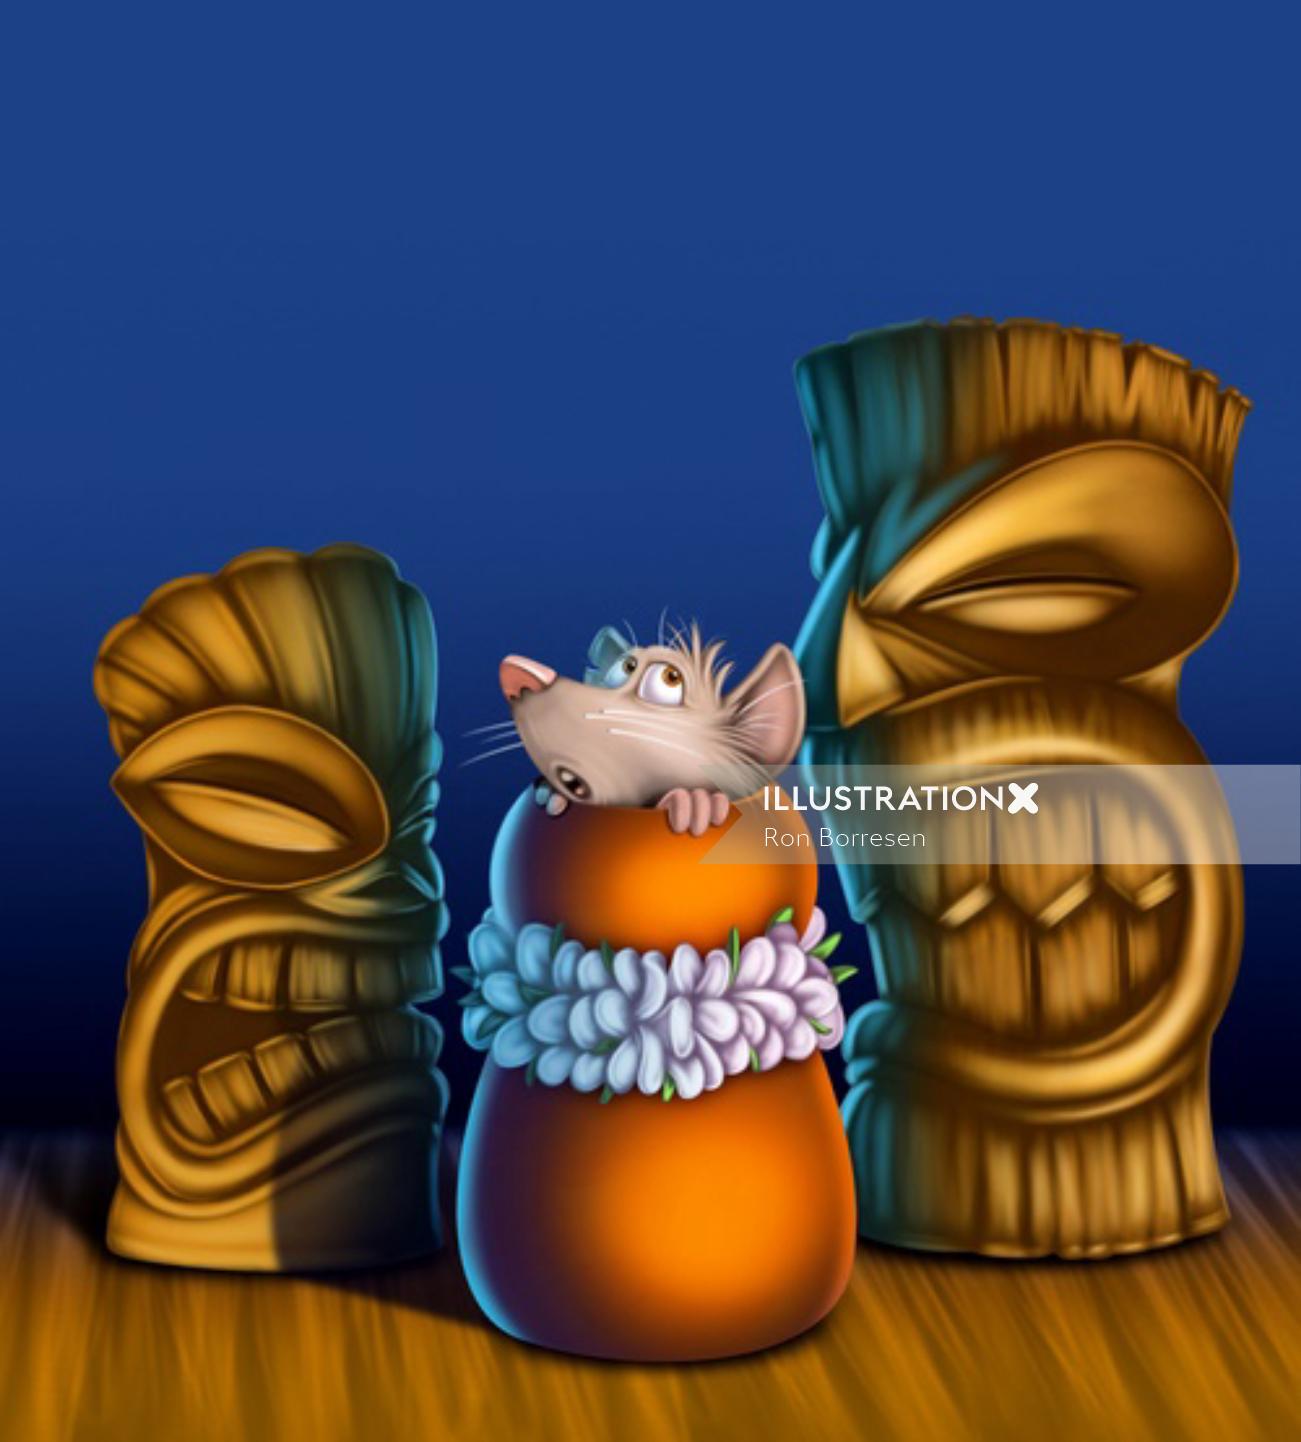 Digital illustration of Idols and Mice
